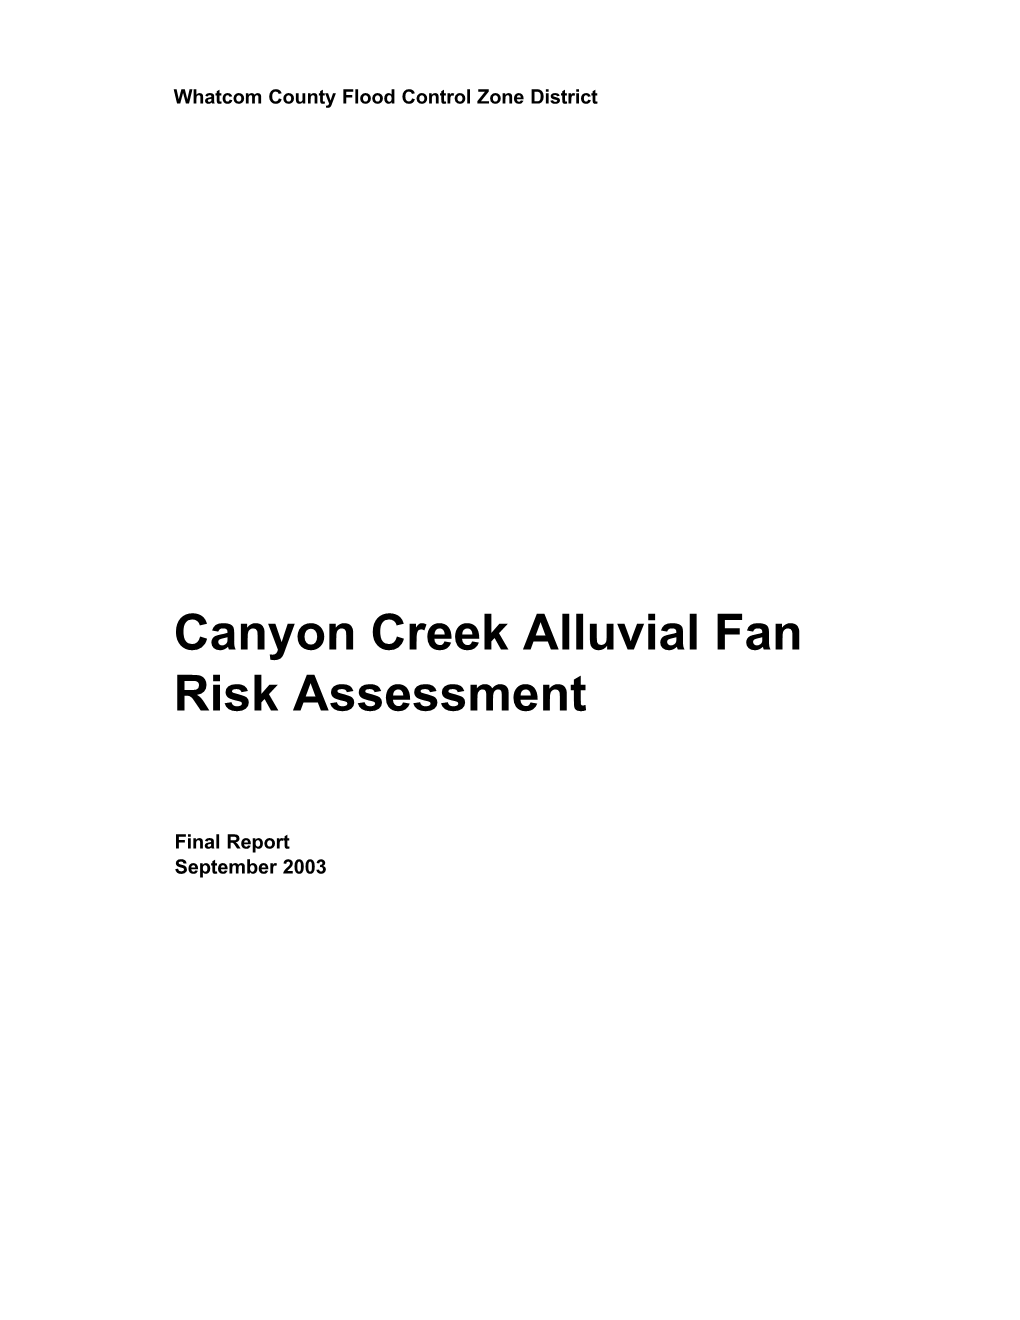 Canyon Creek Alluvial Fan Risk Assessment